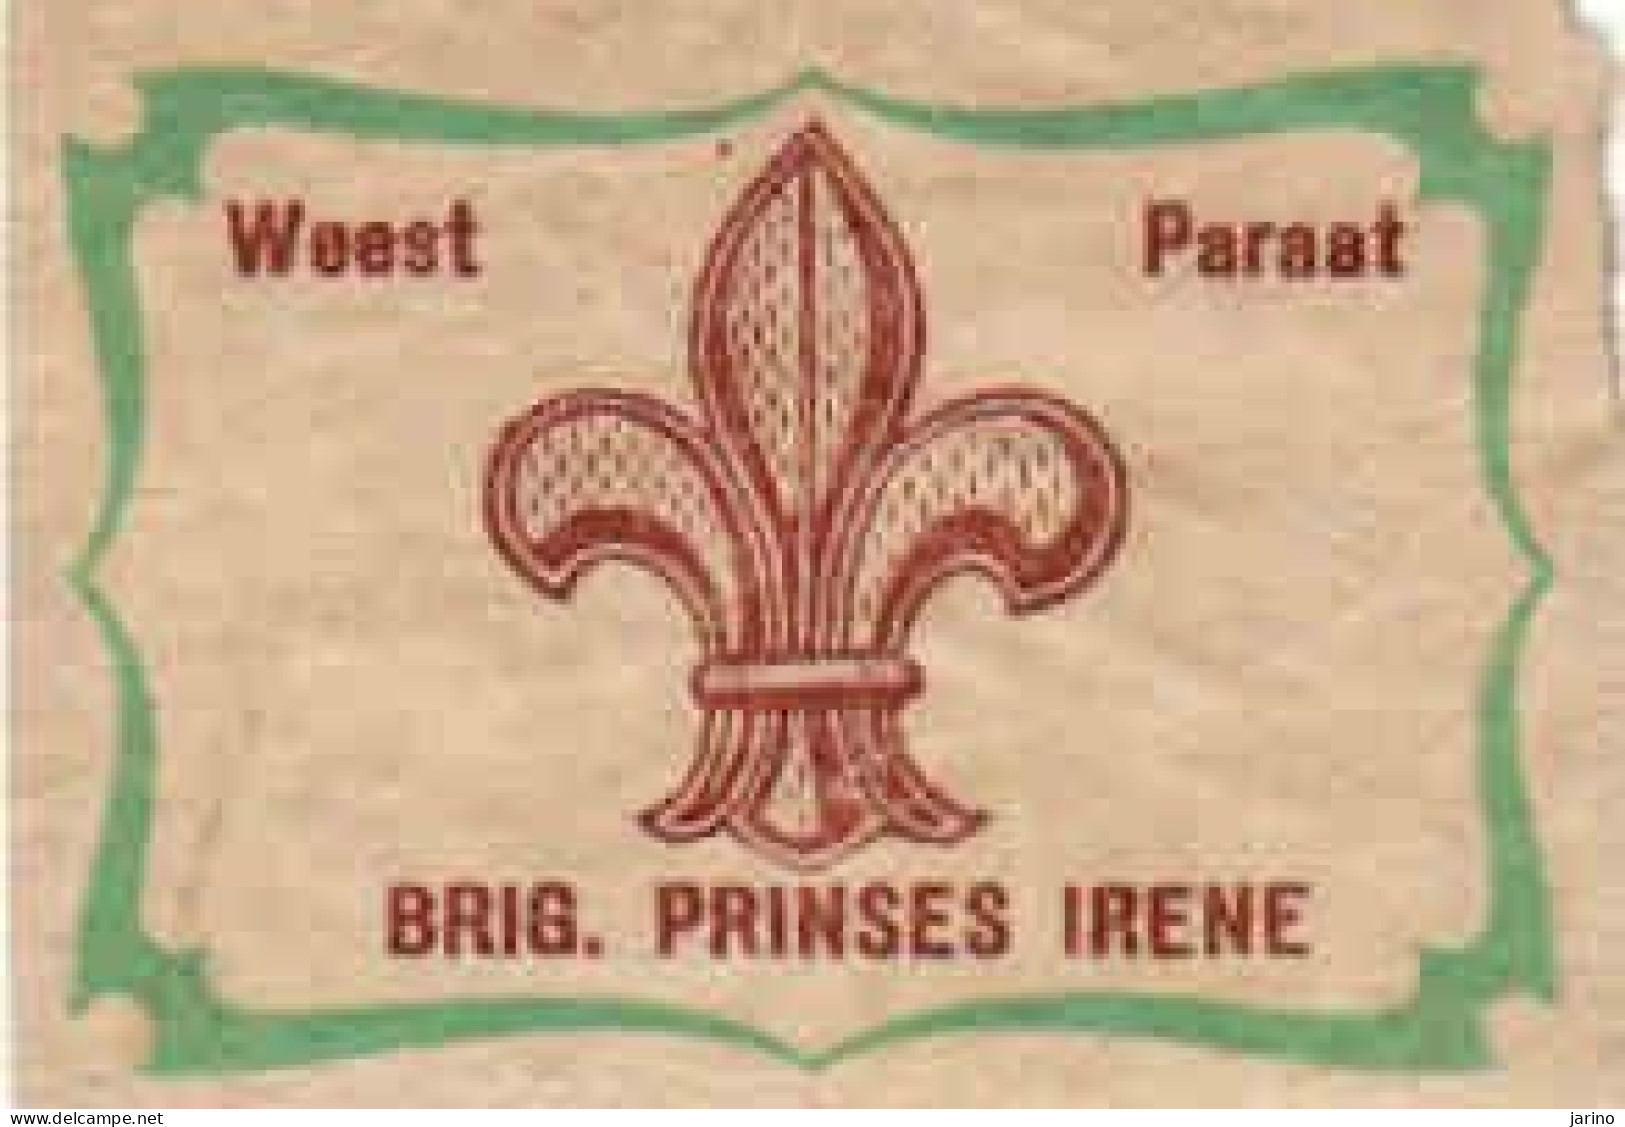 Dutch Matchbox Label, Weest Paraat - Scouting, Brig. Prinses Irene, Holland, Netherlands - Boites D'allumettes - Etiquettes